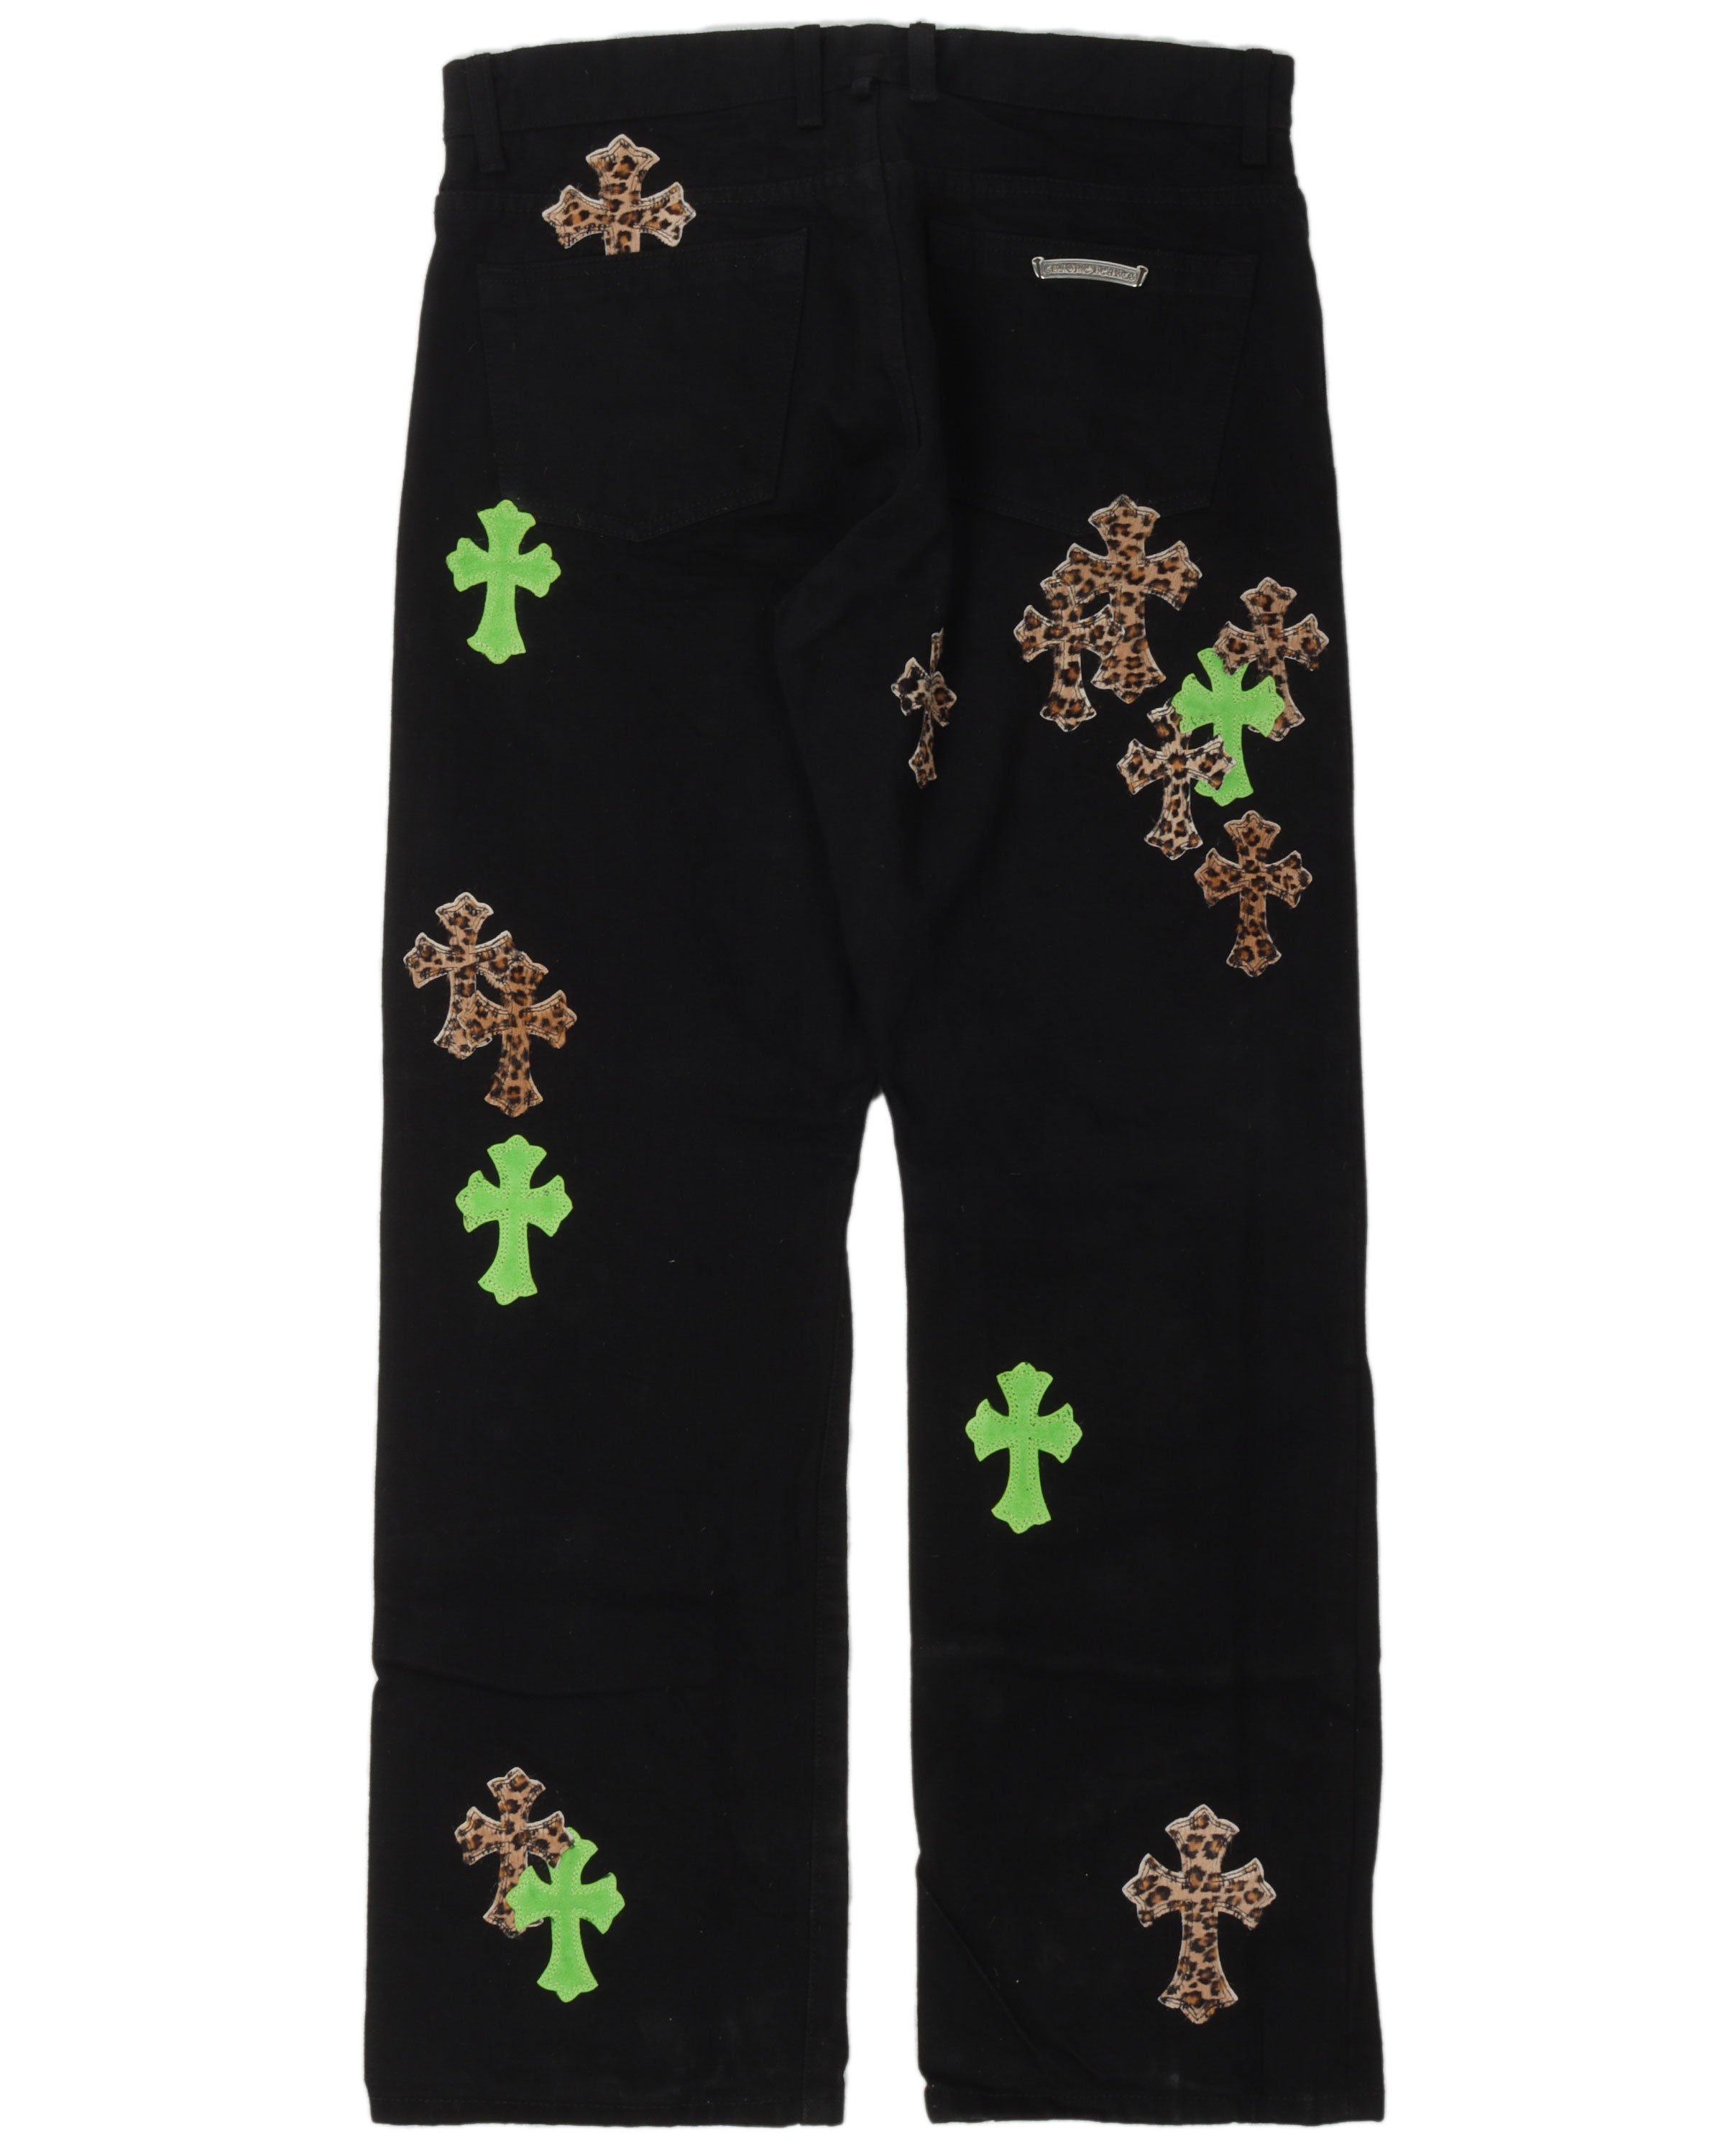 Leopard Cross Patch Jeans w/ 35 Patches